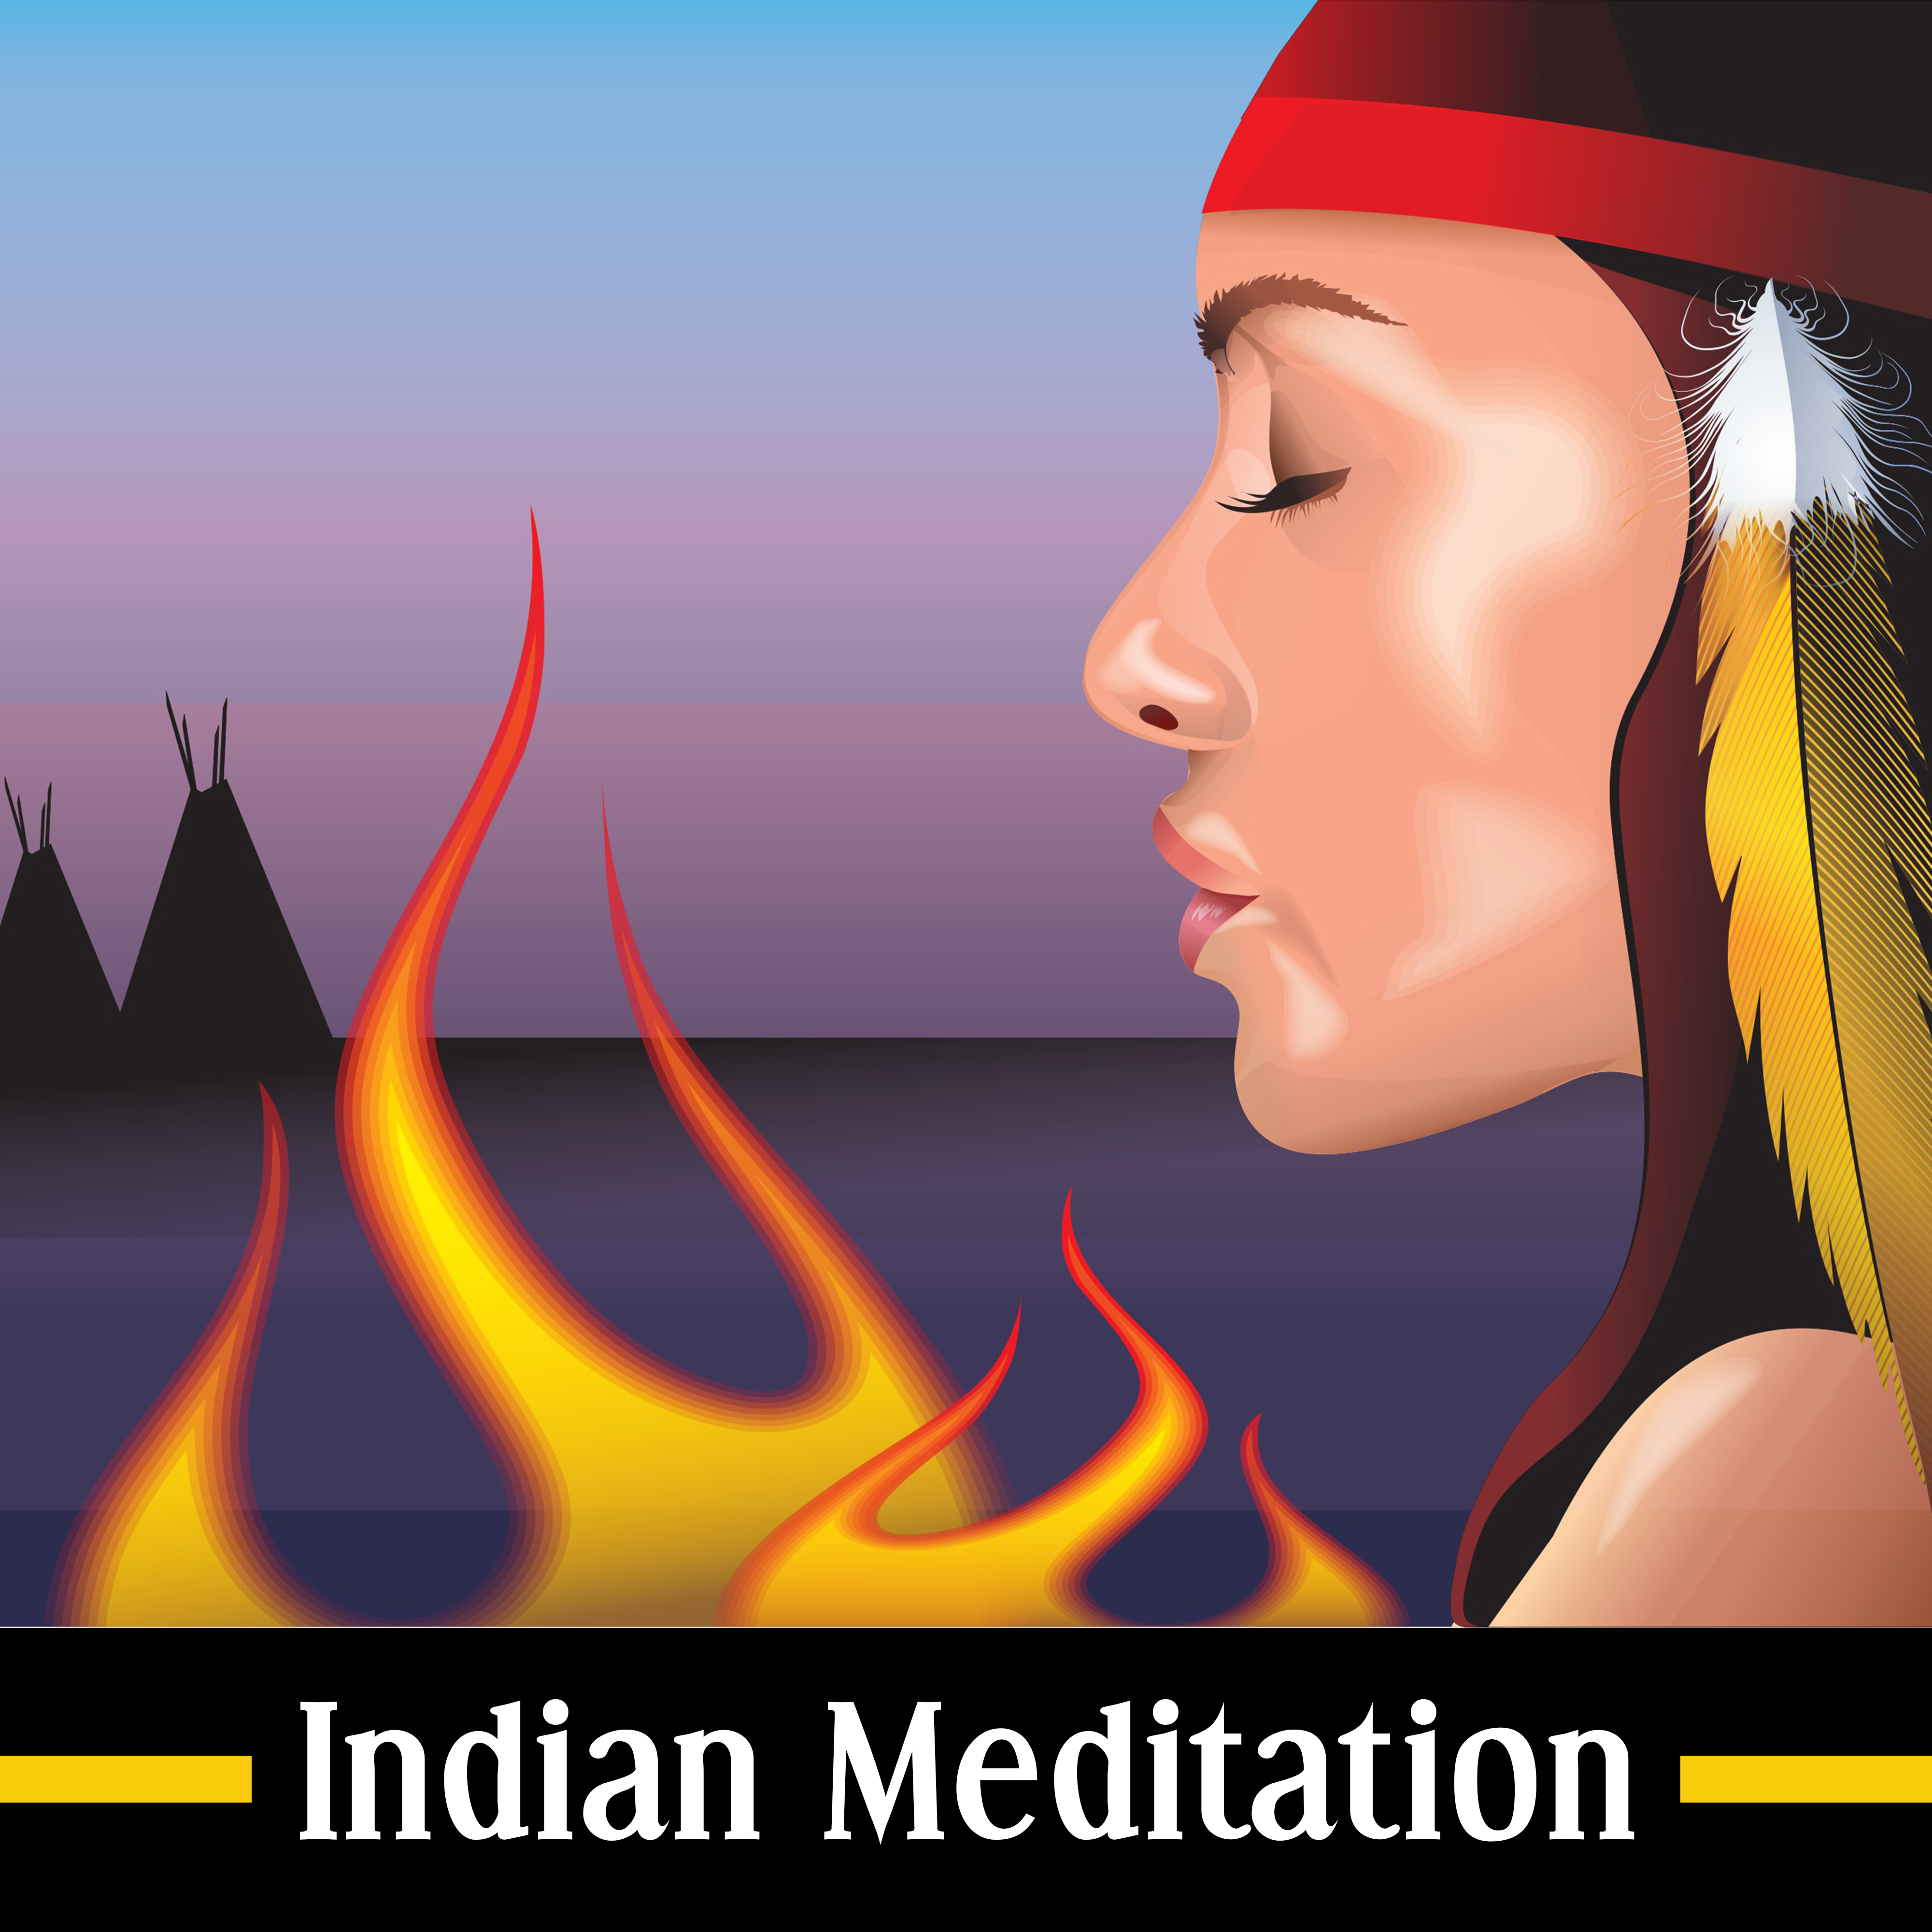 Indian Meditation  Inner Zen, Buddha Lounge, Relaxation, Perfect Concentration, Asian Zen, Training Yoga